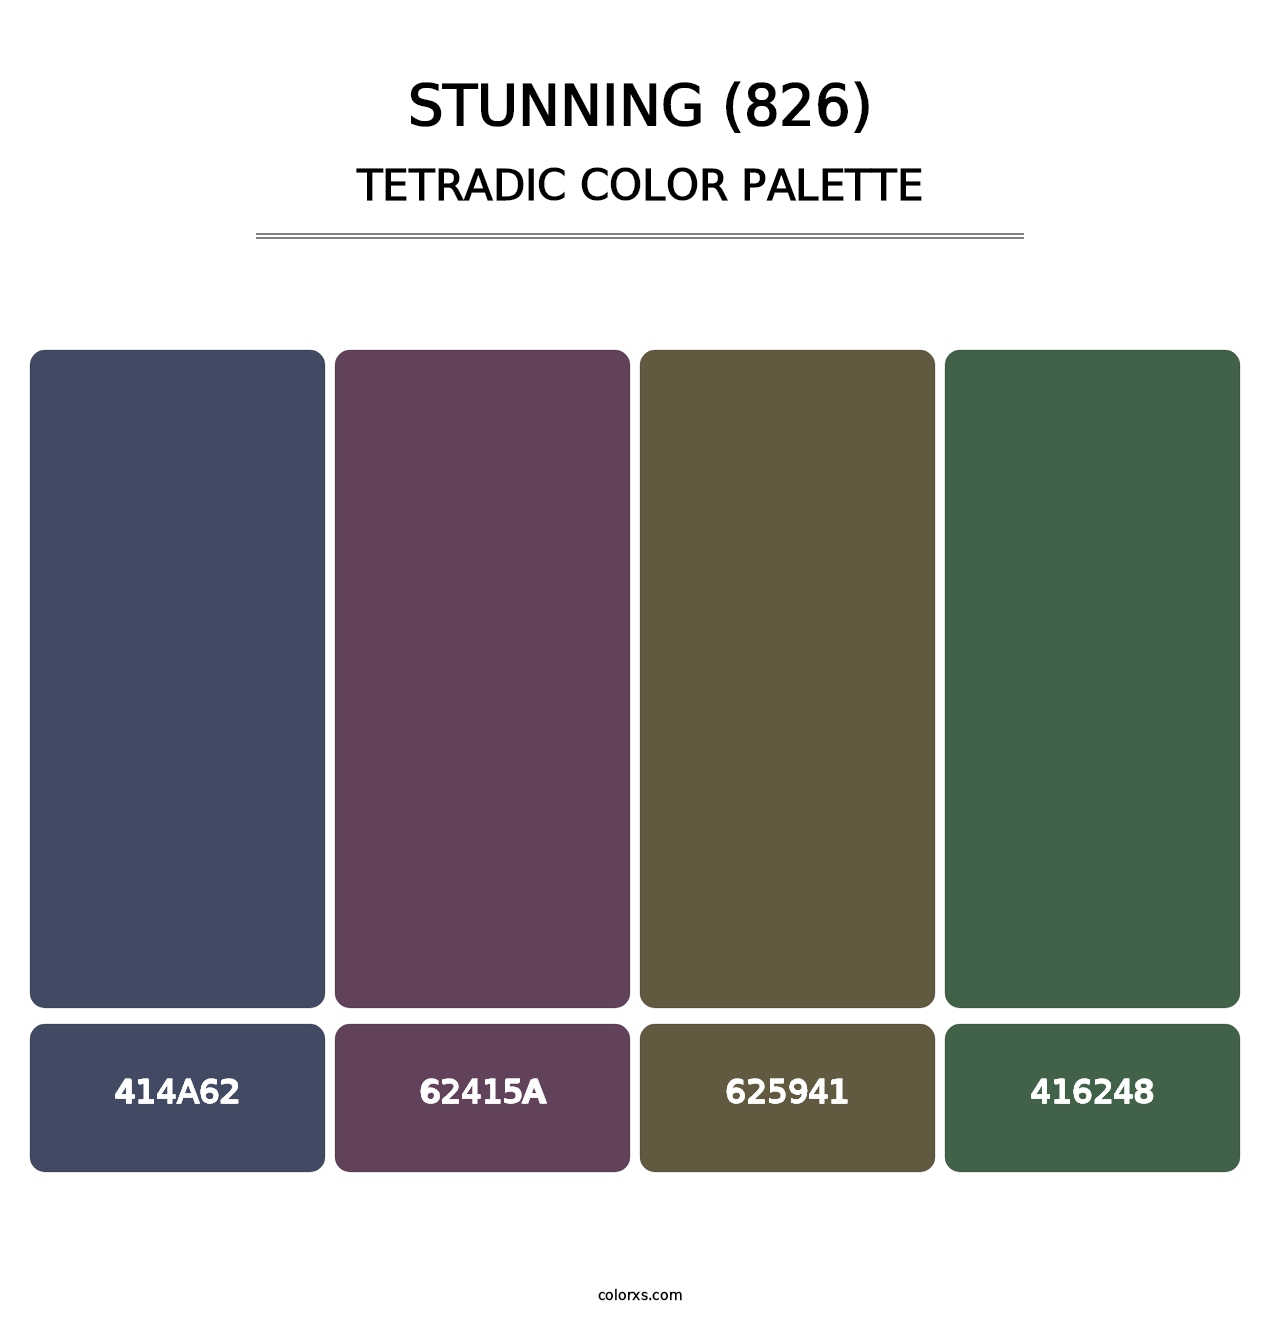 Stunning (826) - Tetradic Color Palette